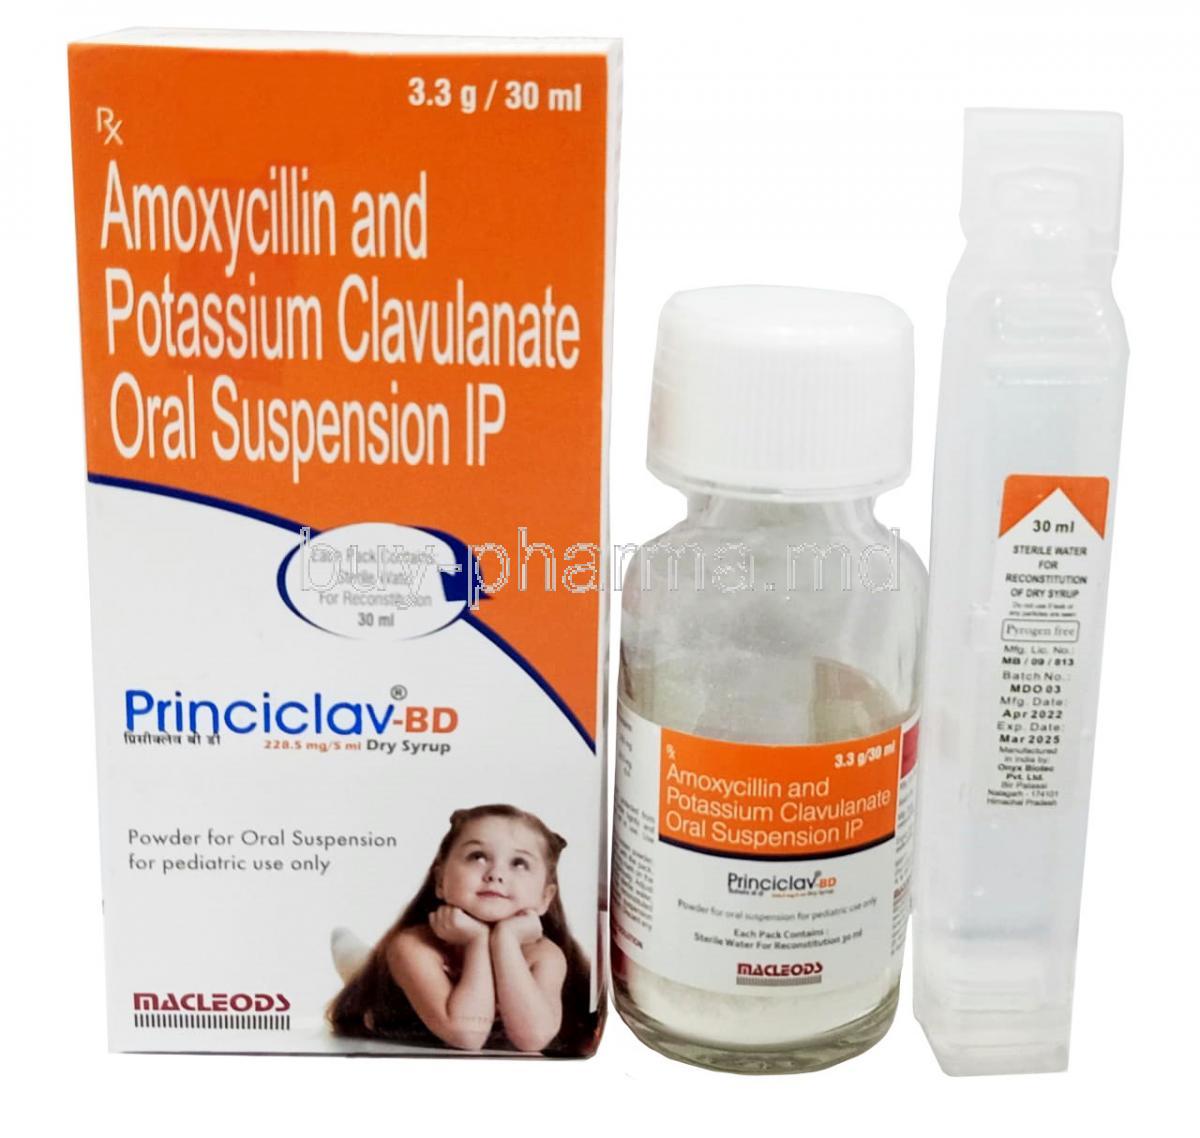 Princiclav-BD Dry Syrup,Amoxycillin 200 mg / Clavulanic Acid 28.5 mg, Dry Syrup 30mL, Macleods Pharmaceuticals Pvt Ltd, Box, Bottle, Spoit